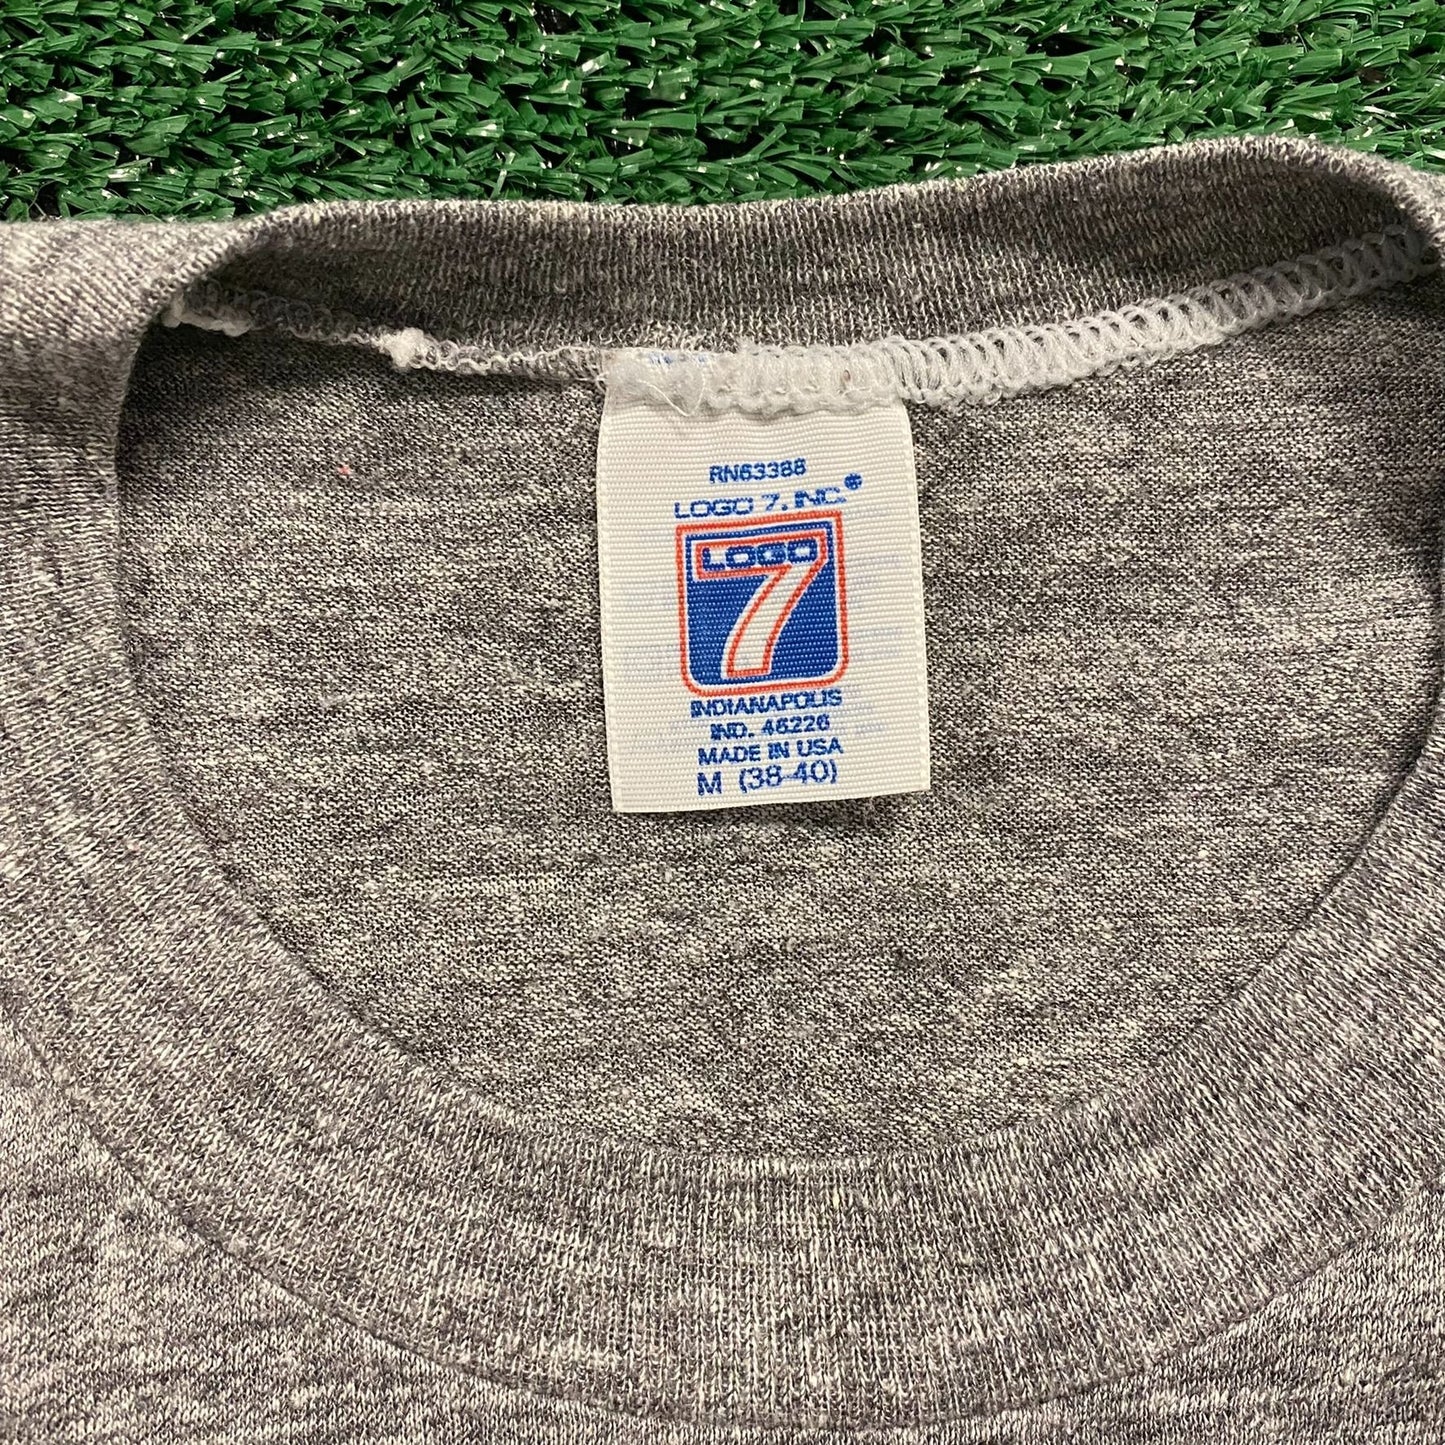 Chicago Bears Vintage 90s Football T-Shirt